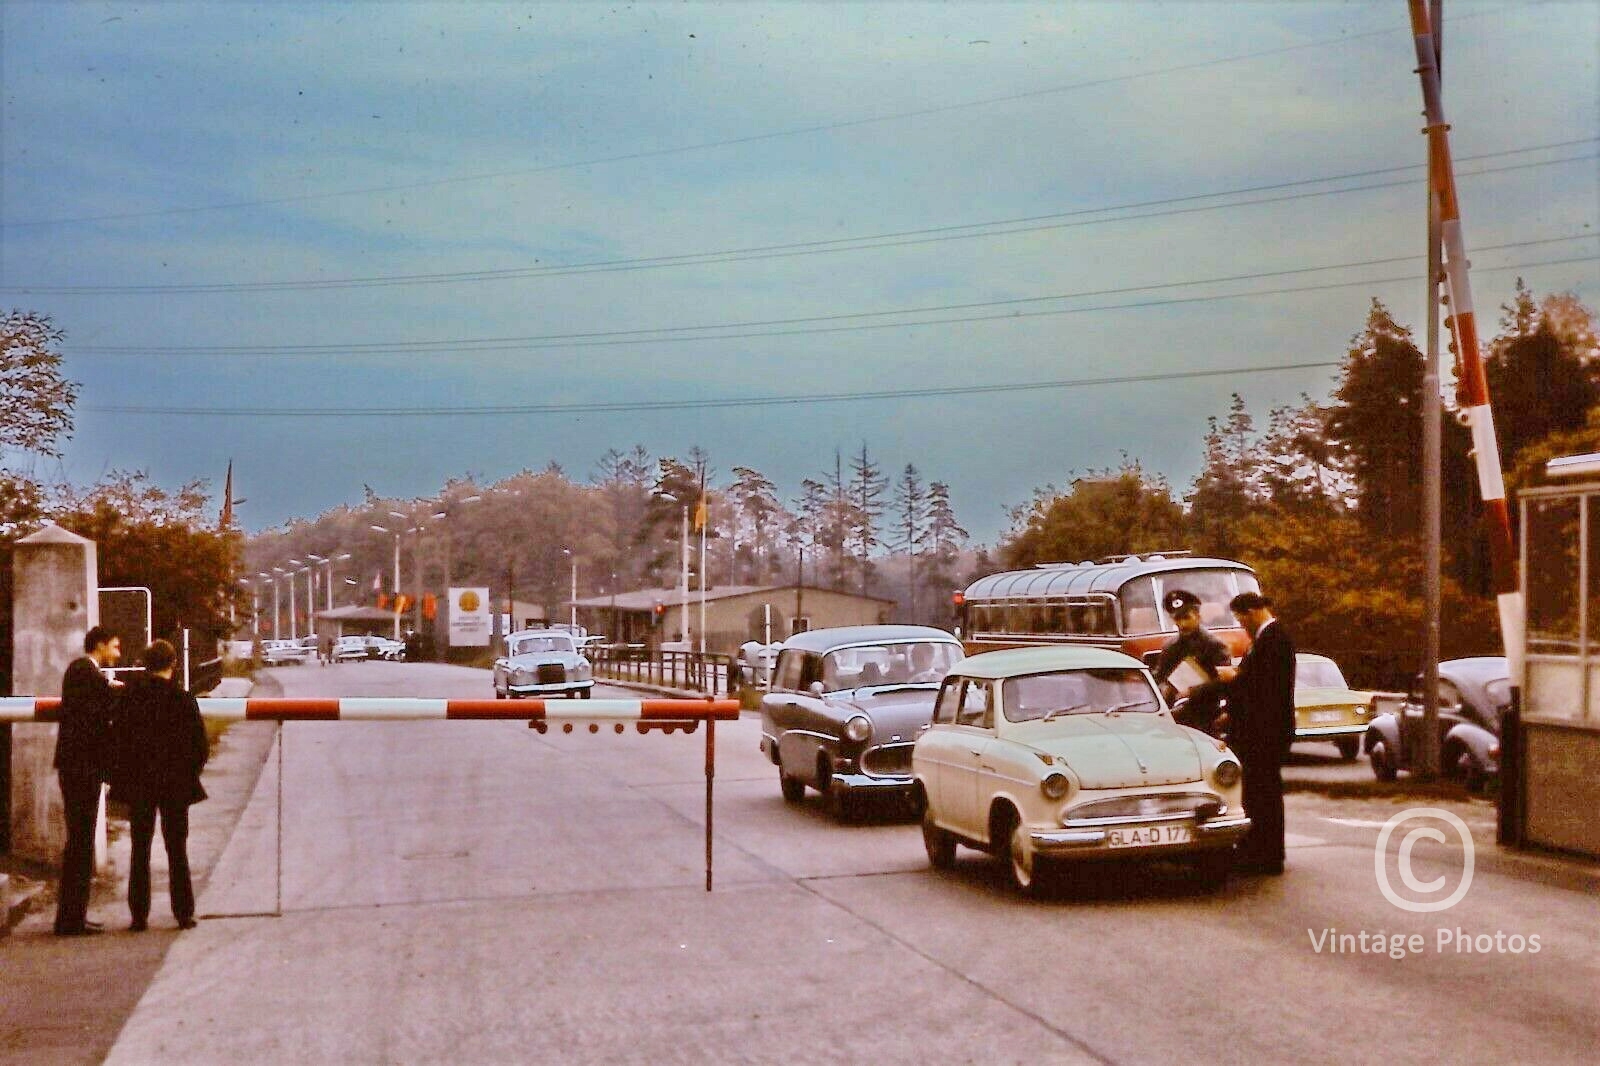 1963 Check Point Alpha, Germany